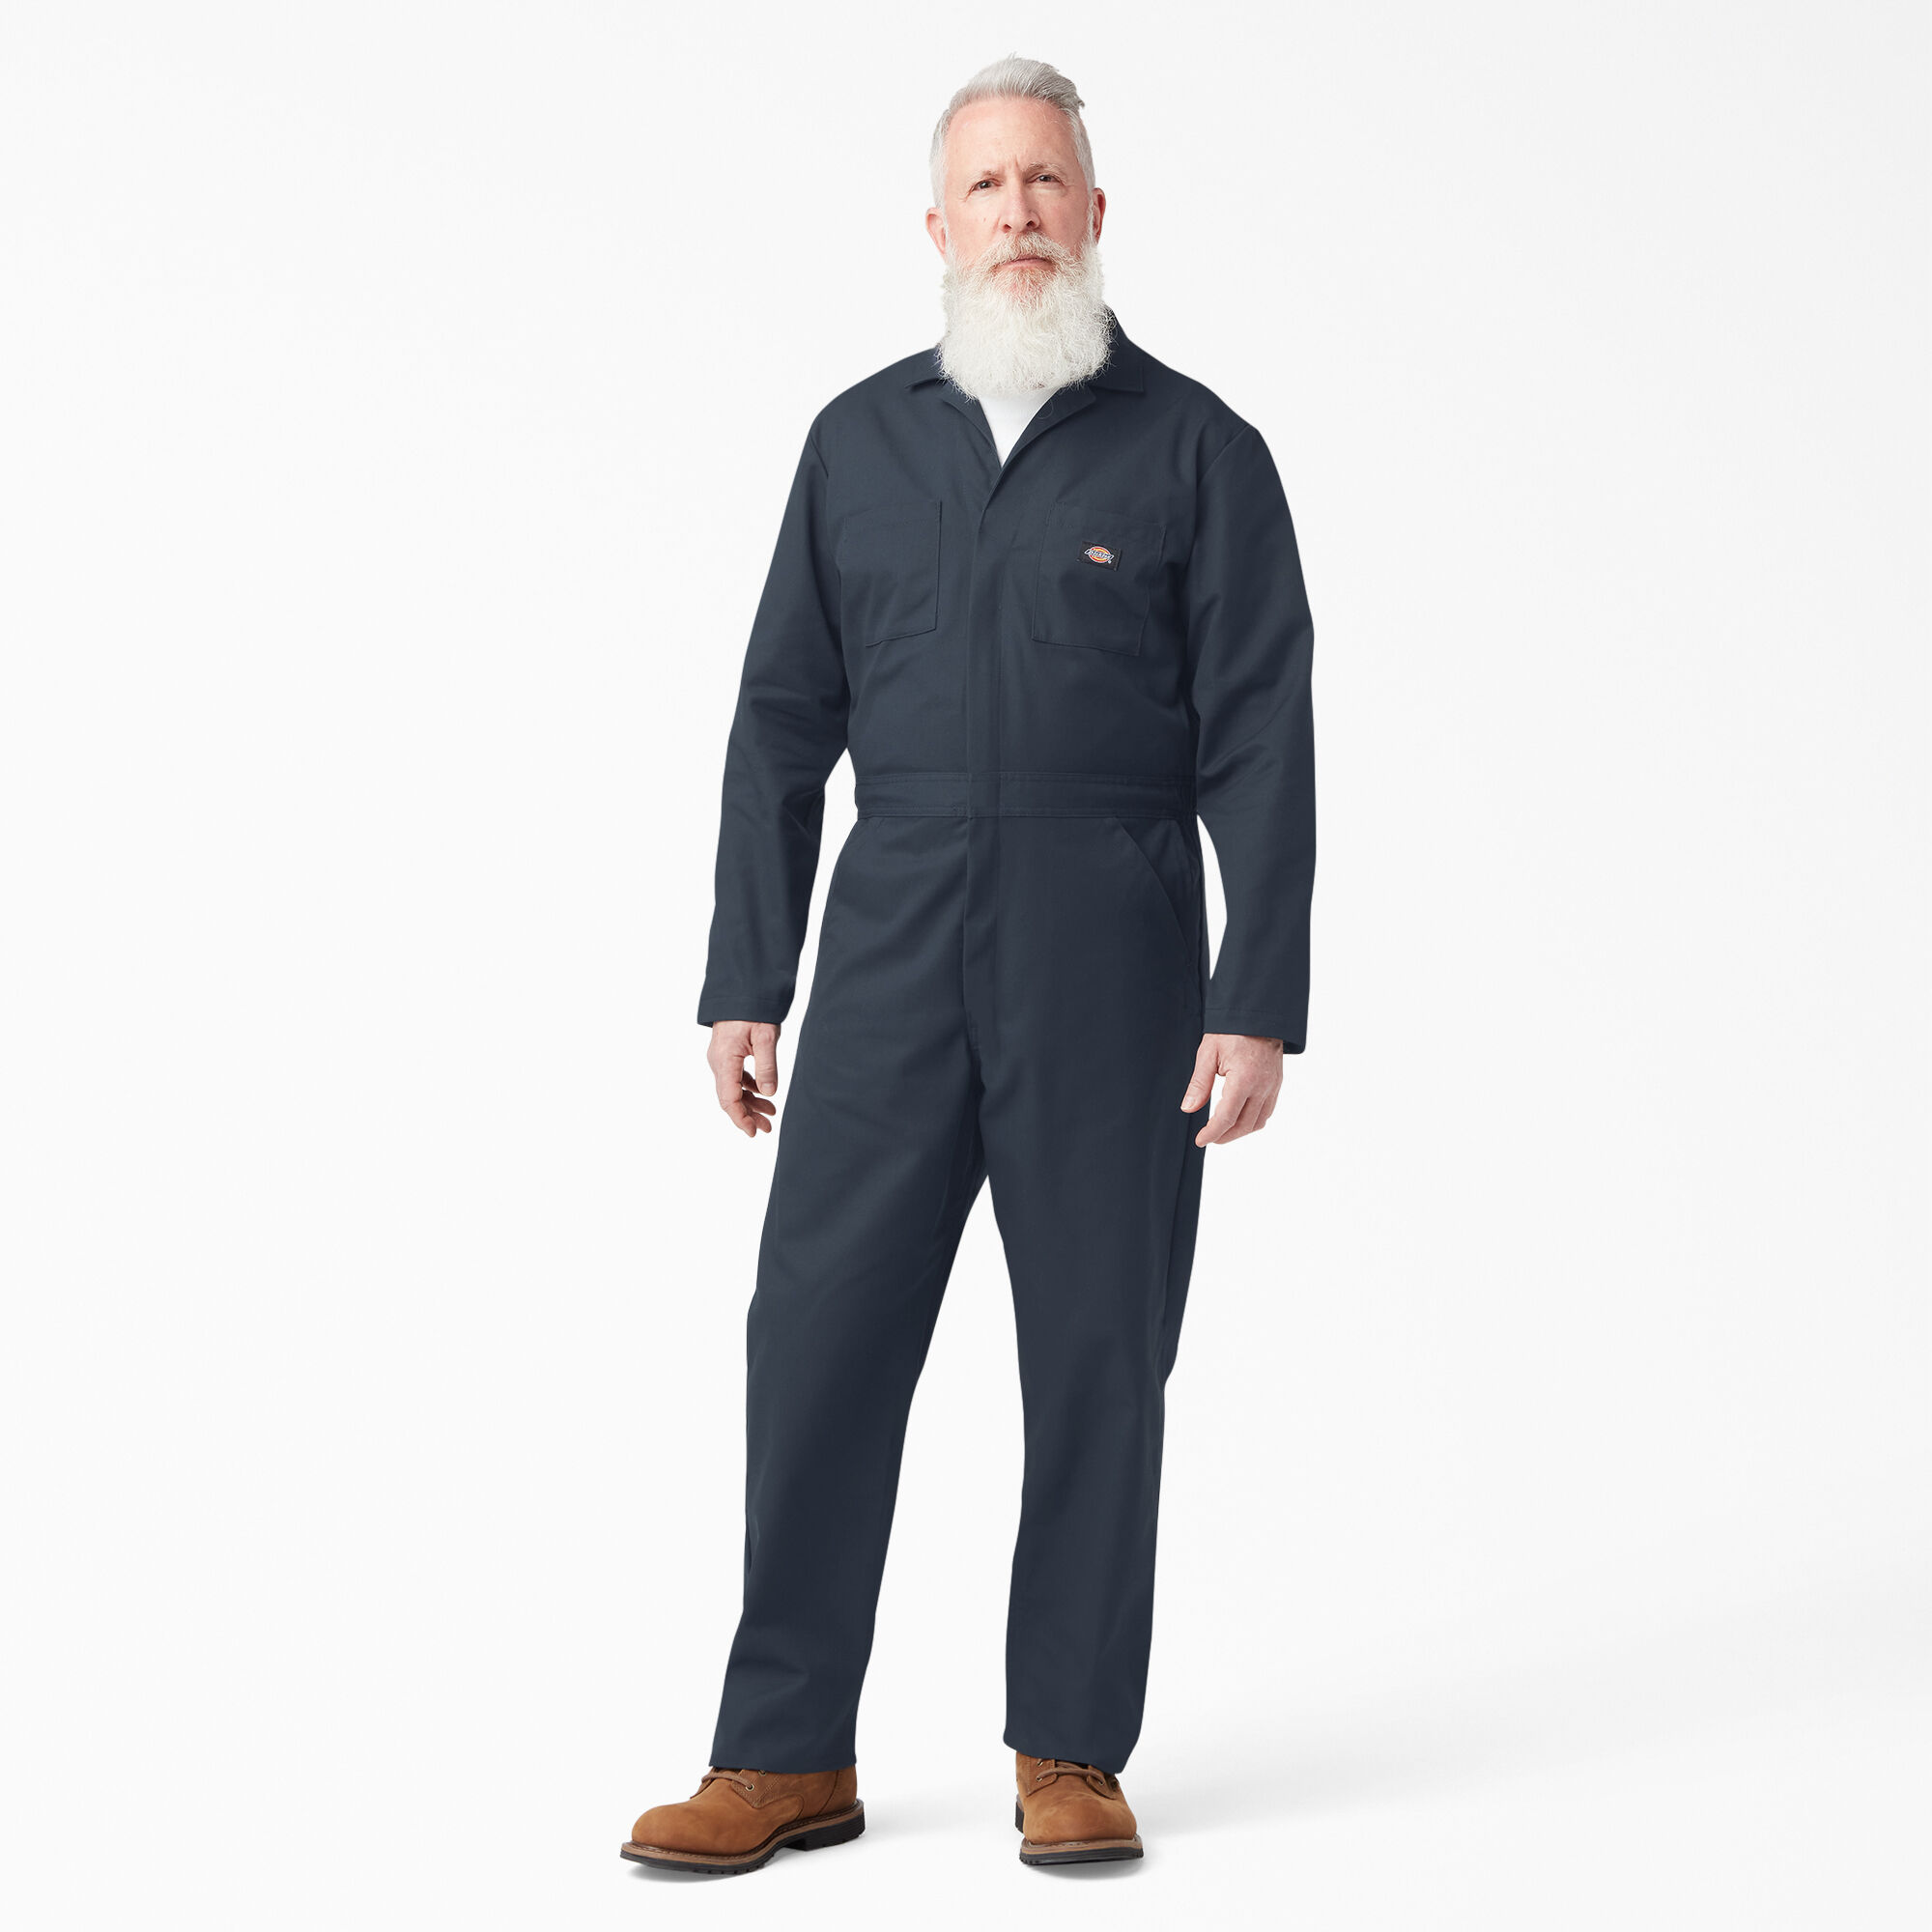 Work Wear Men's Overalls Boiler Suits Coveralls Mechanics Boilersuit Long-Romper 